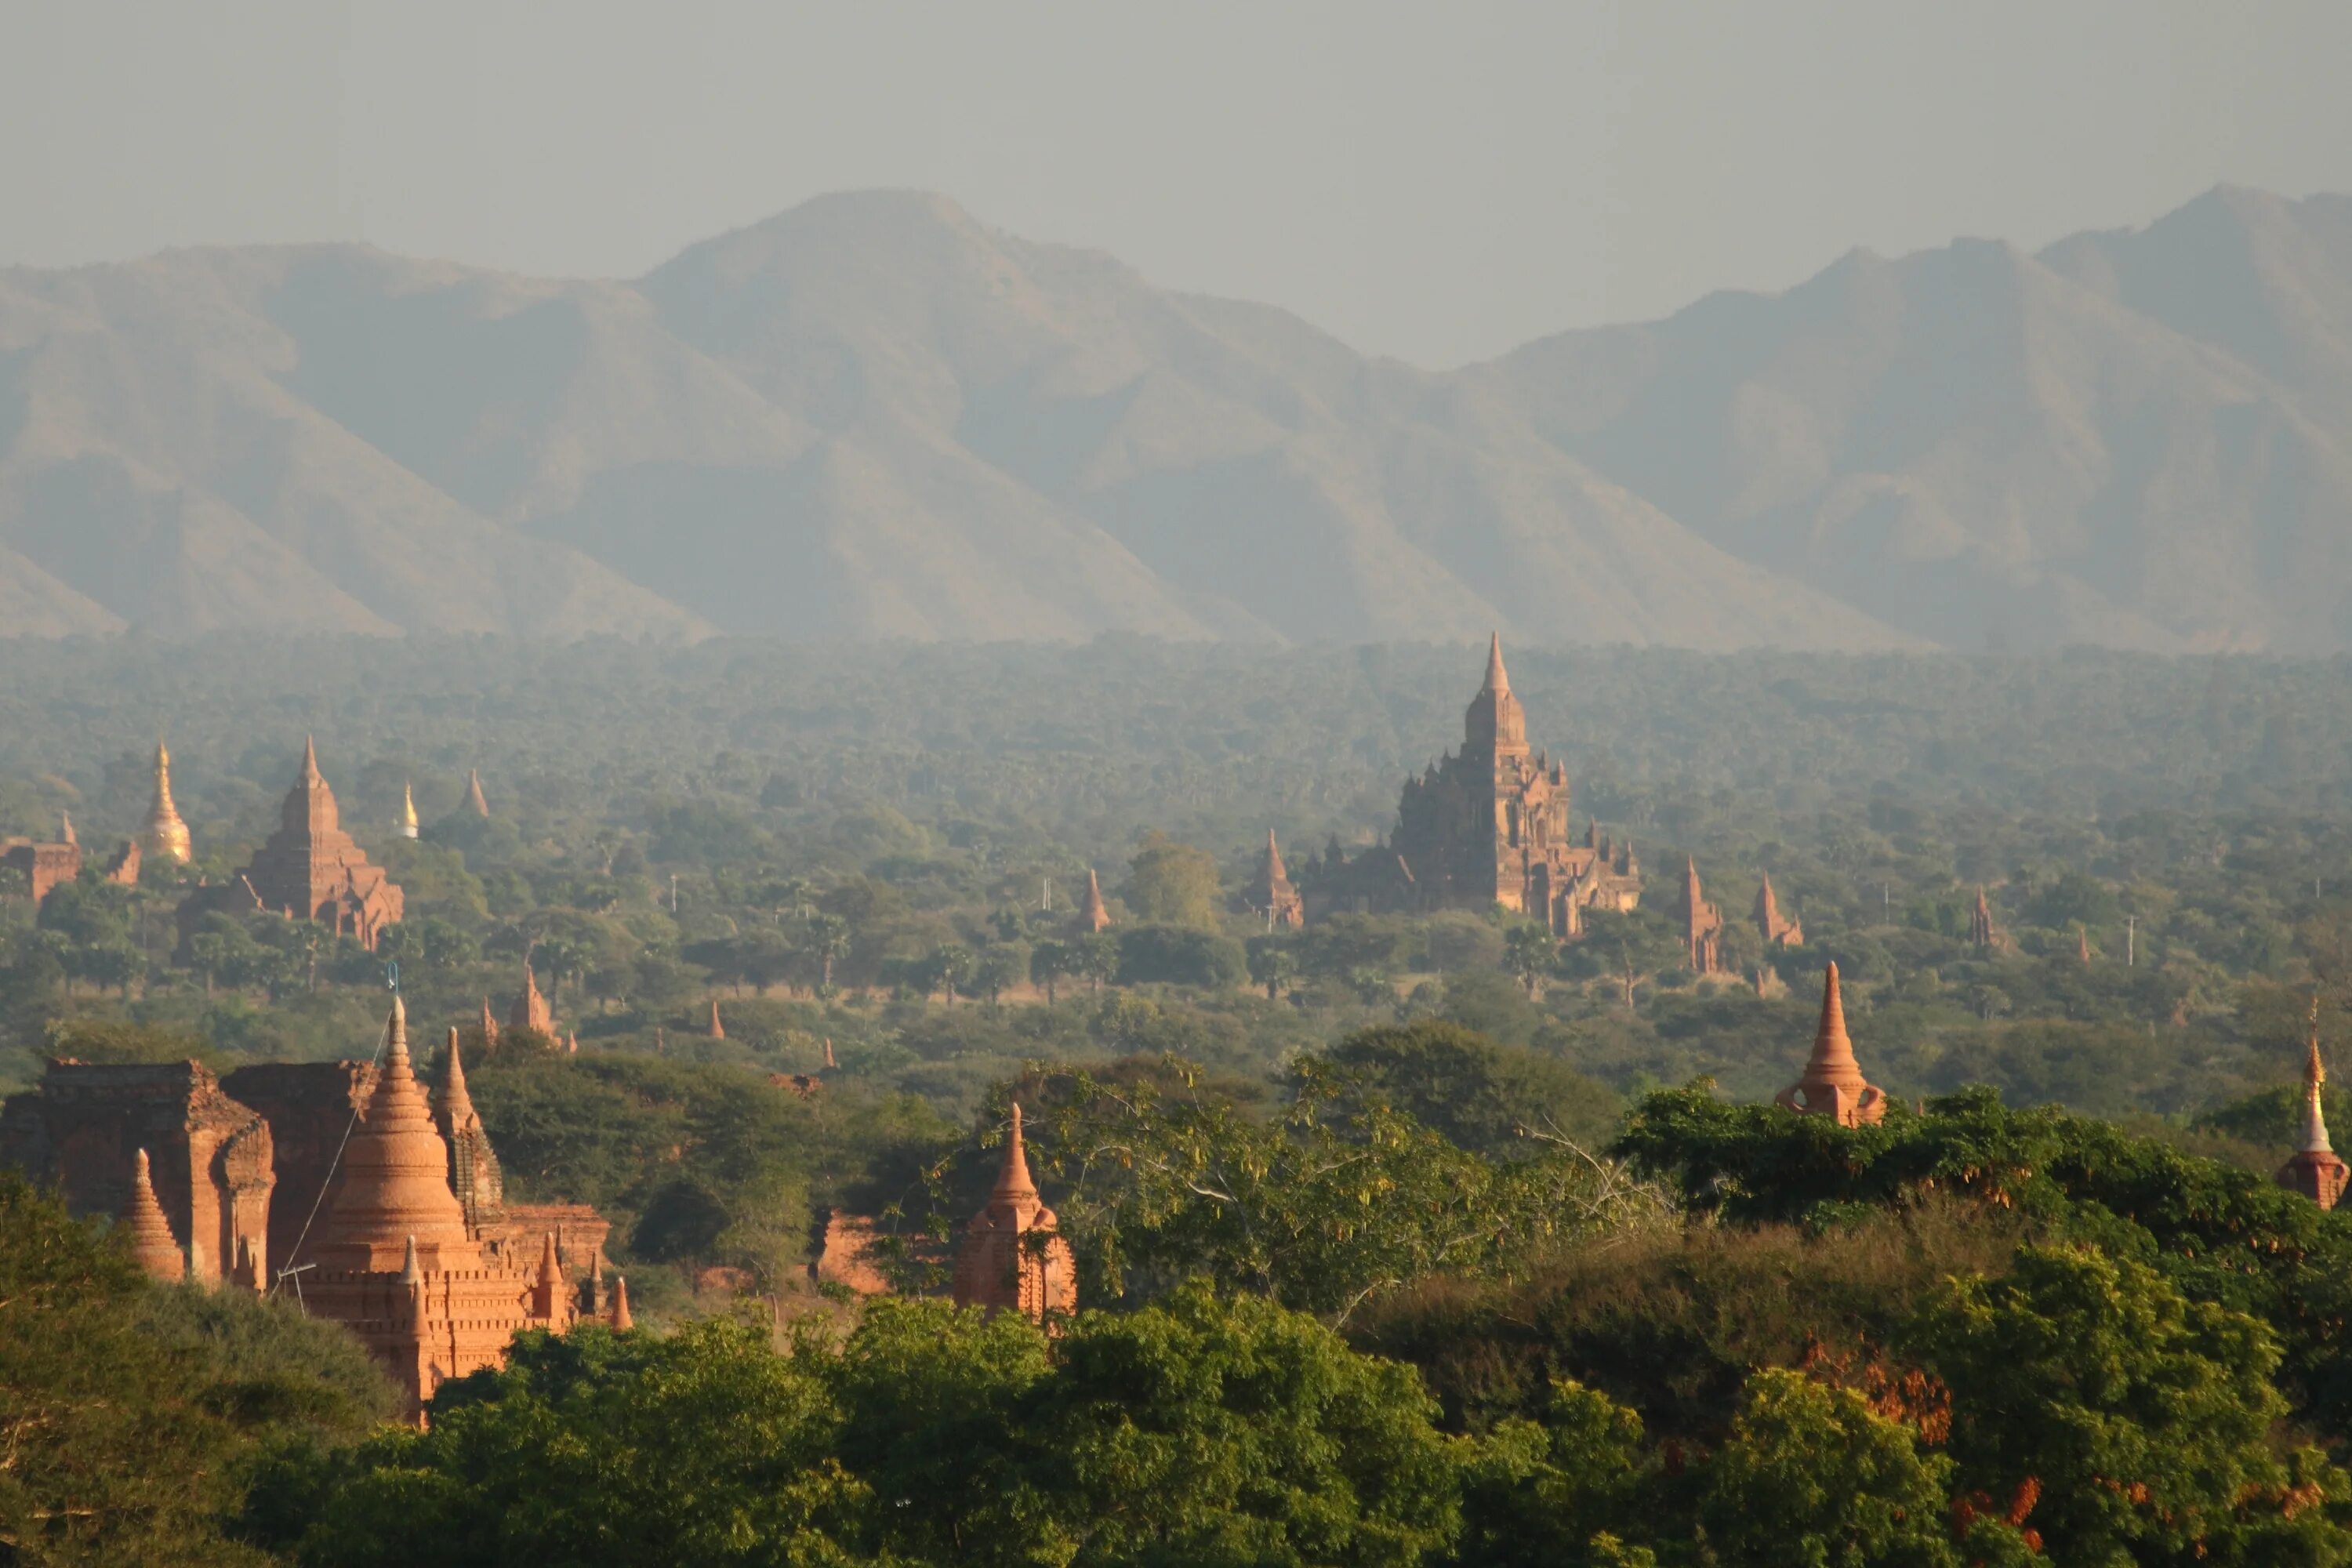 Страна 1000 городов. Паган Мьянма Паган. Долина храмов Мьянма. Паган город тысячи храмов в Мьянма. Древняя столица Баган, Мьянма.